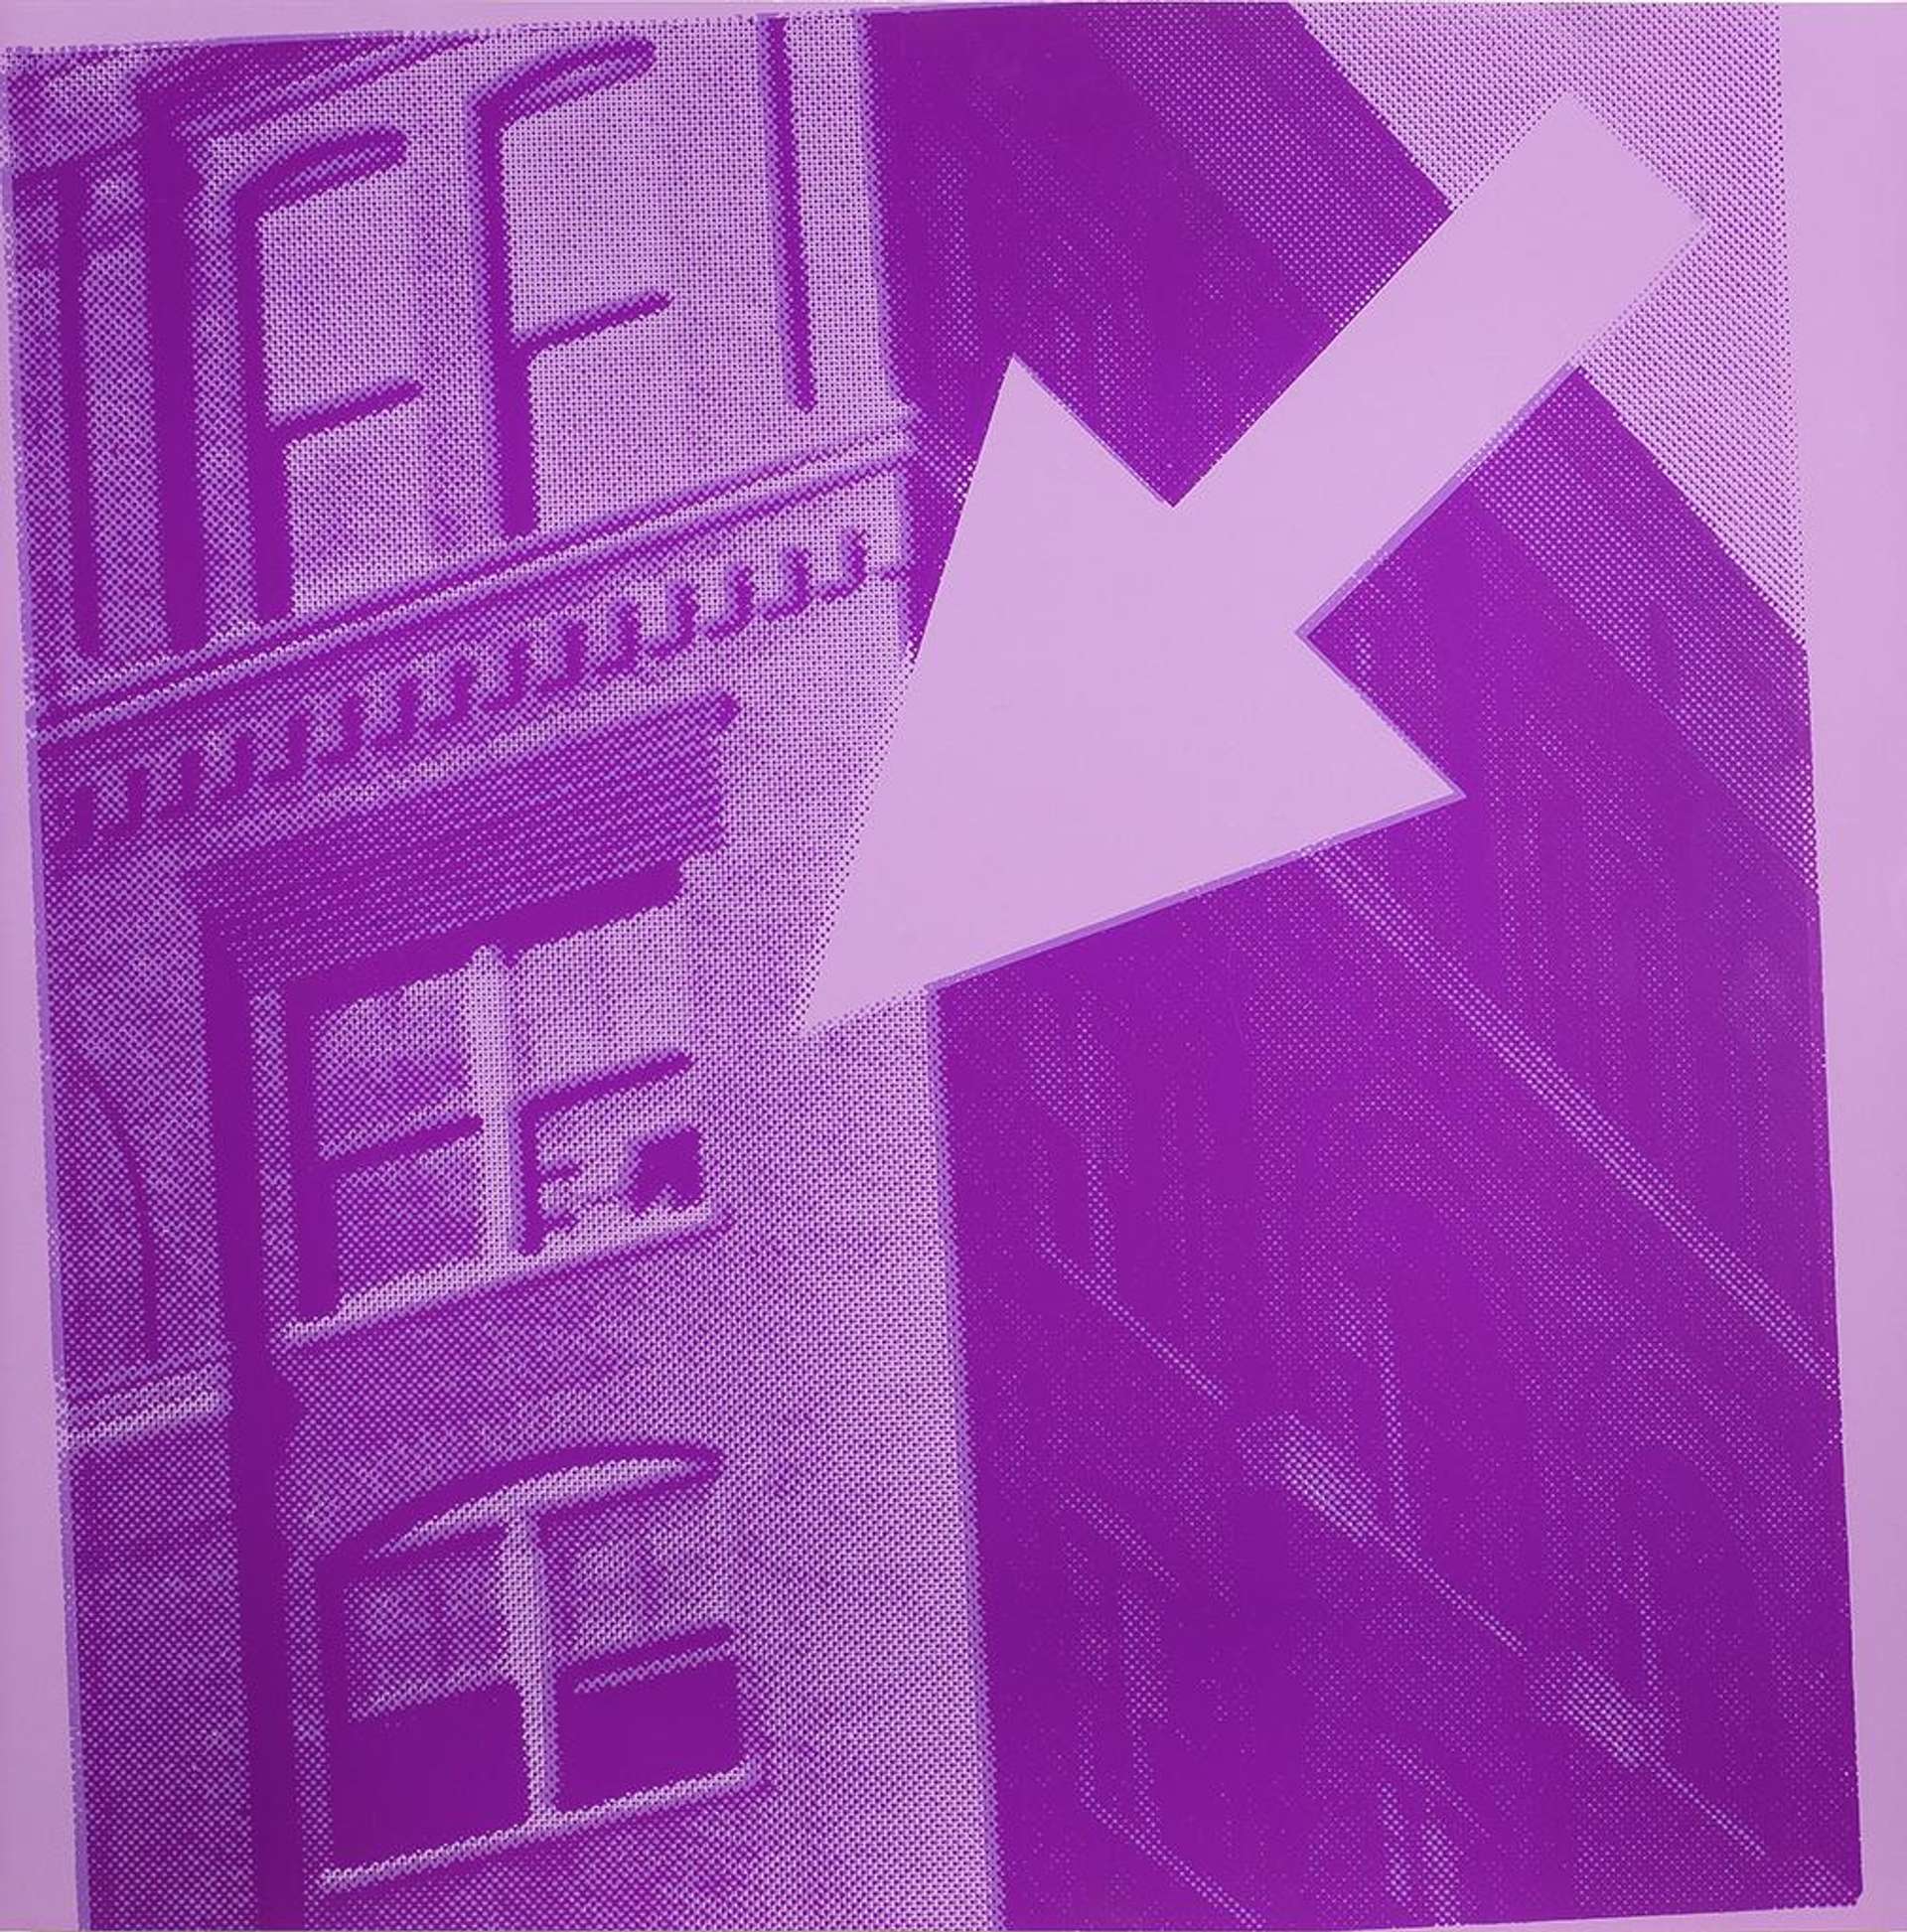 Flash November 22 (F. & S. II.39) - Signed Print by Andy Warhol 1963 - MyArtBroker